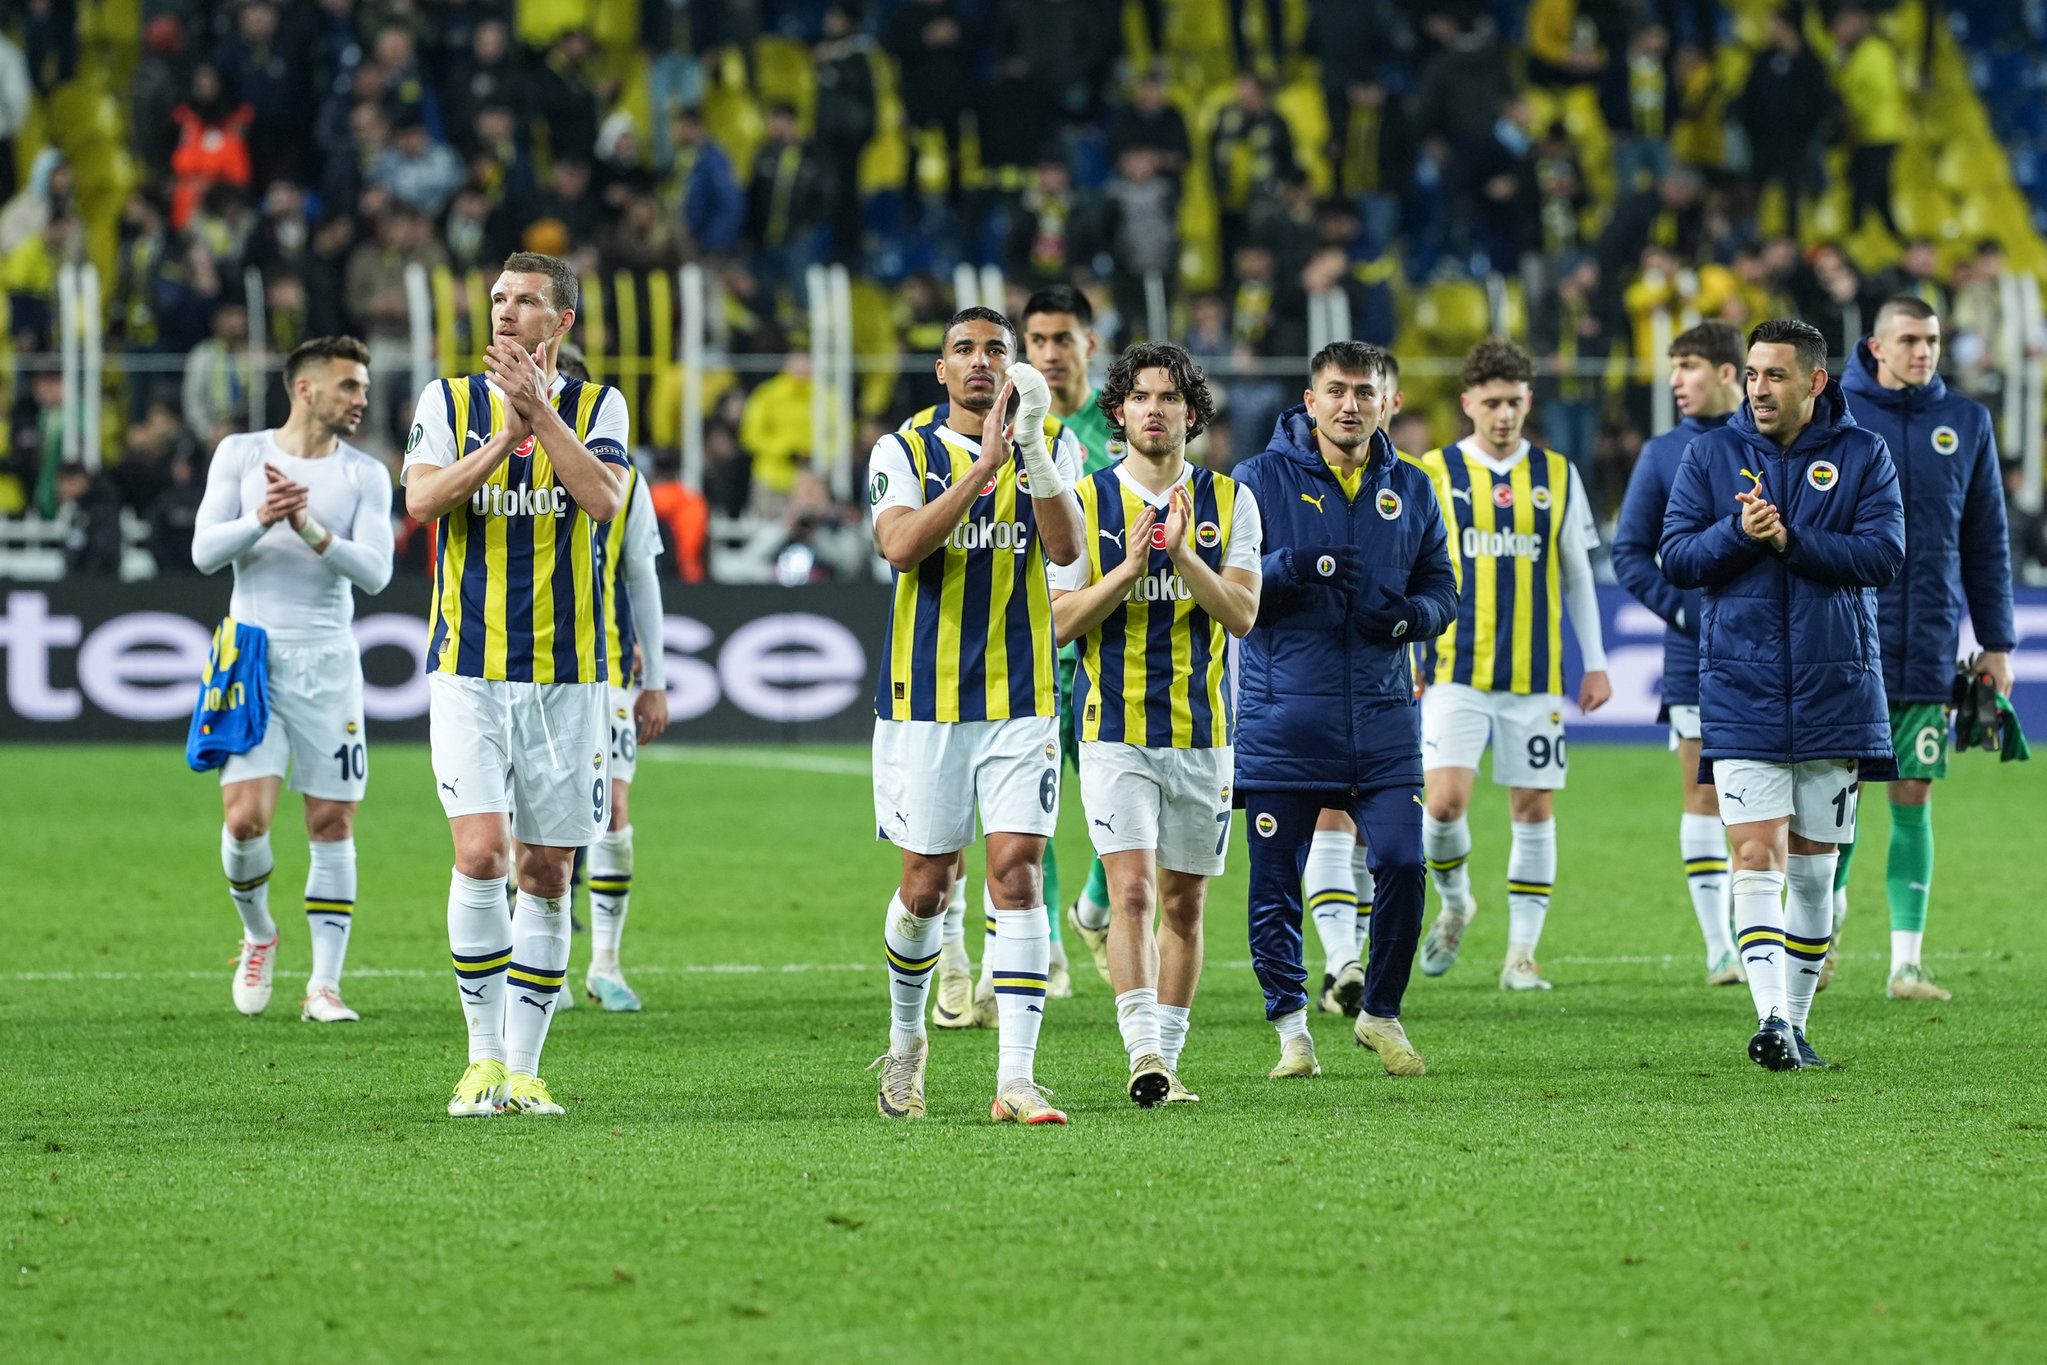 Konferans Ligi’nde çeyrek finale kalan Fenerbahçe kasayı doldurdu! İşte o kazanç